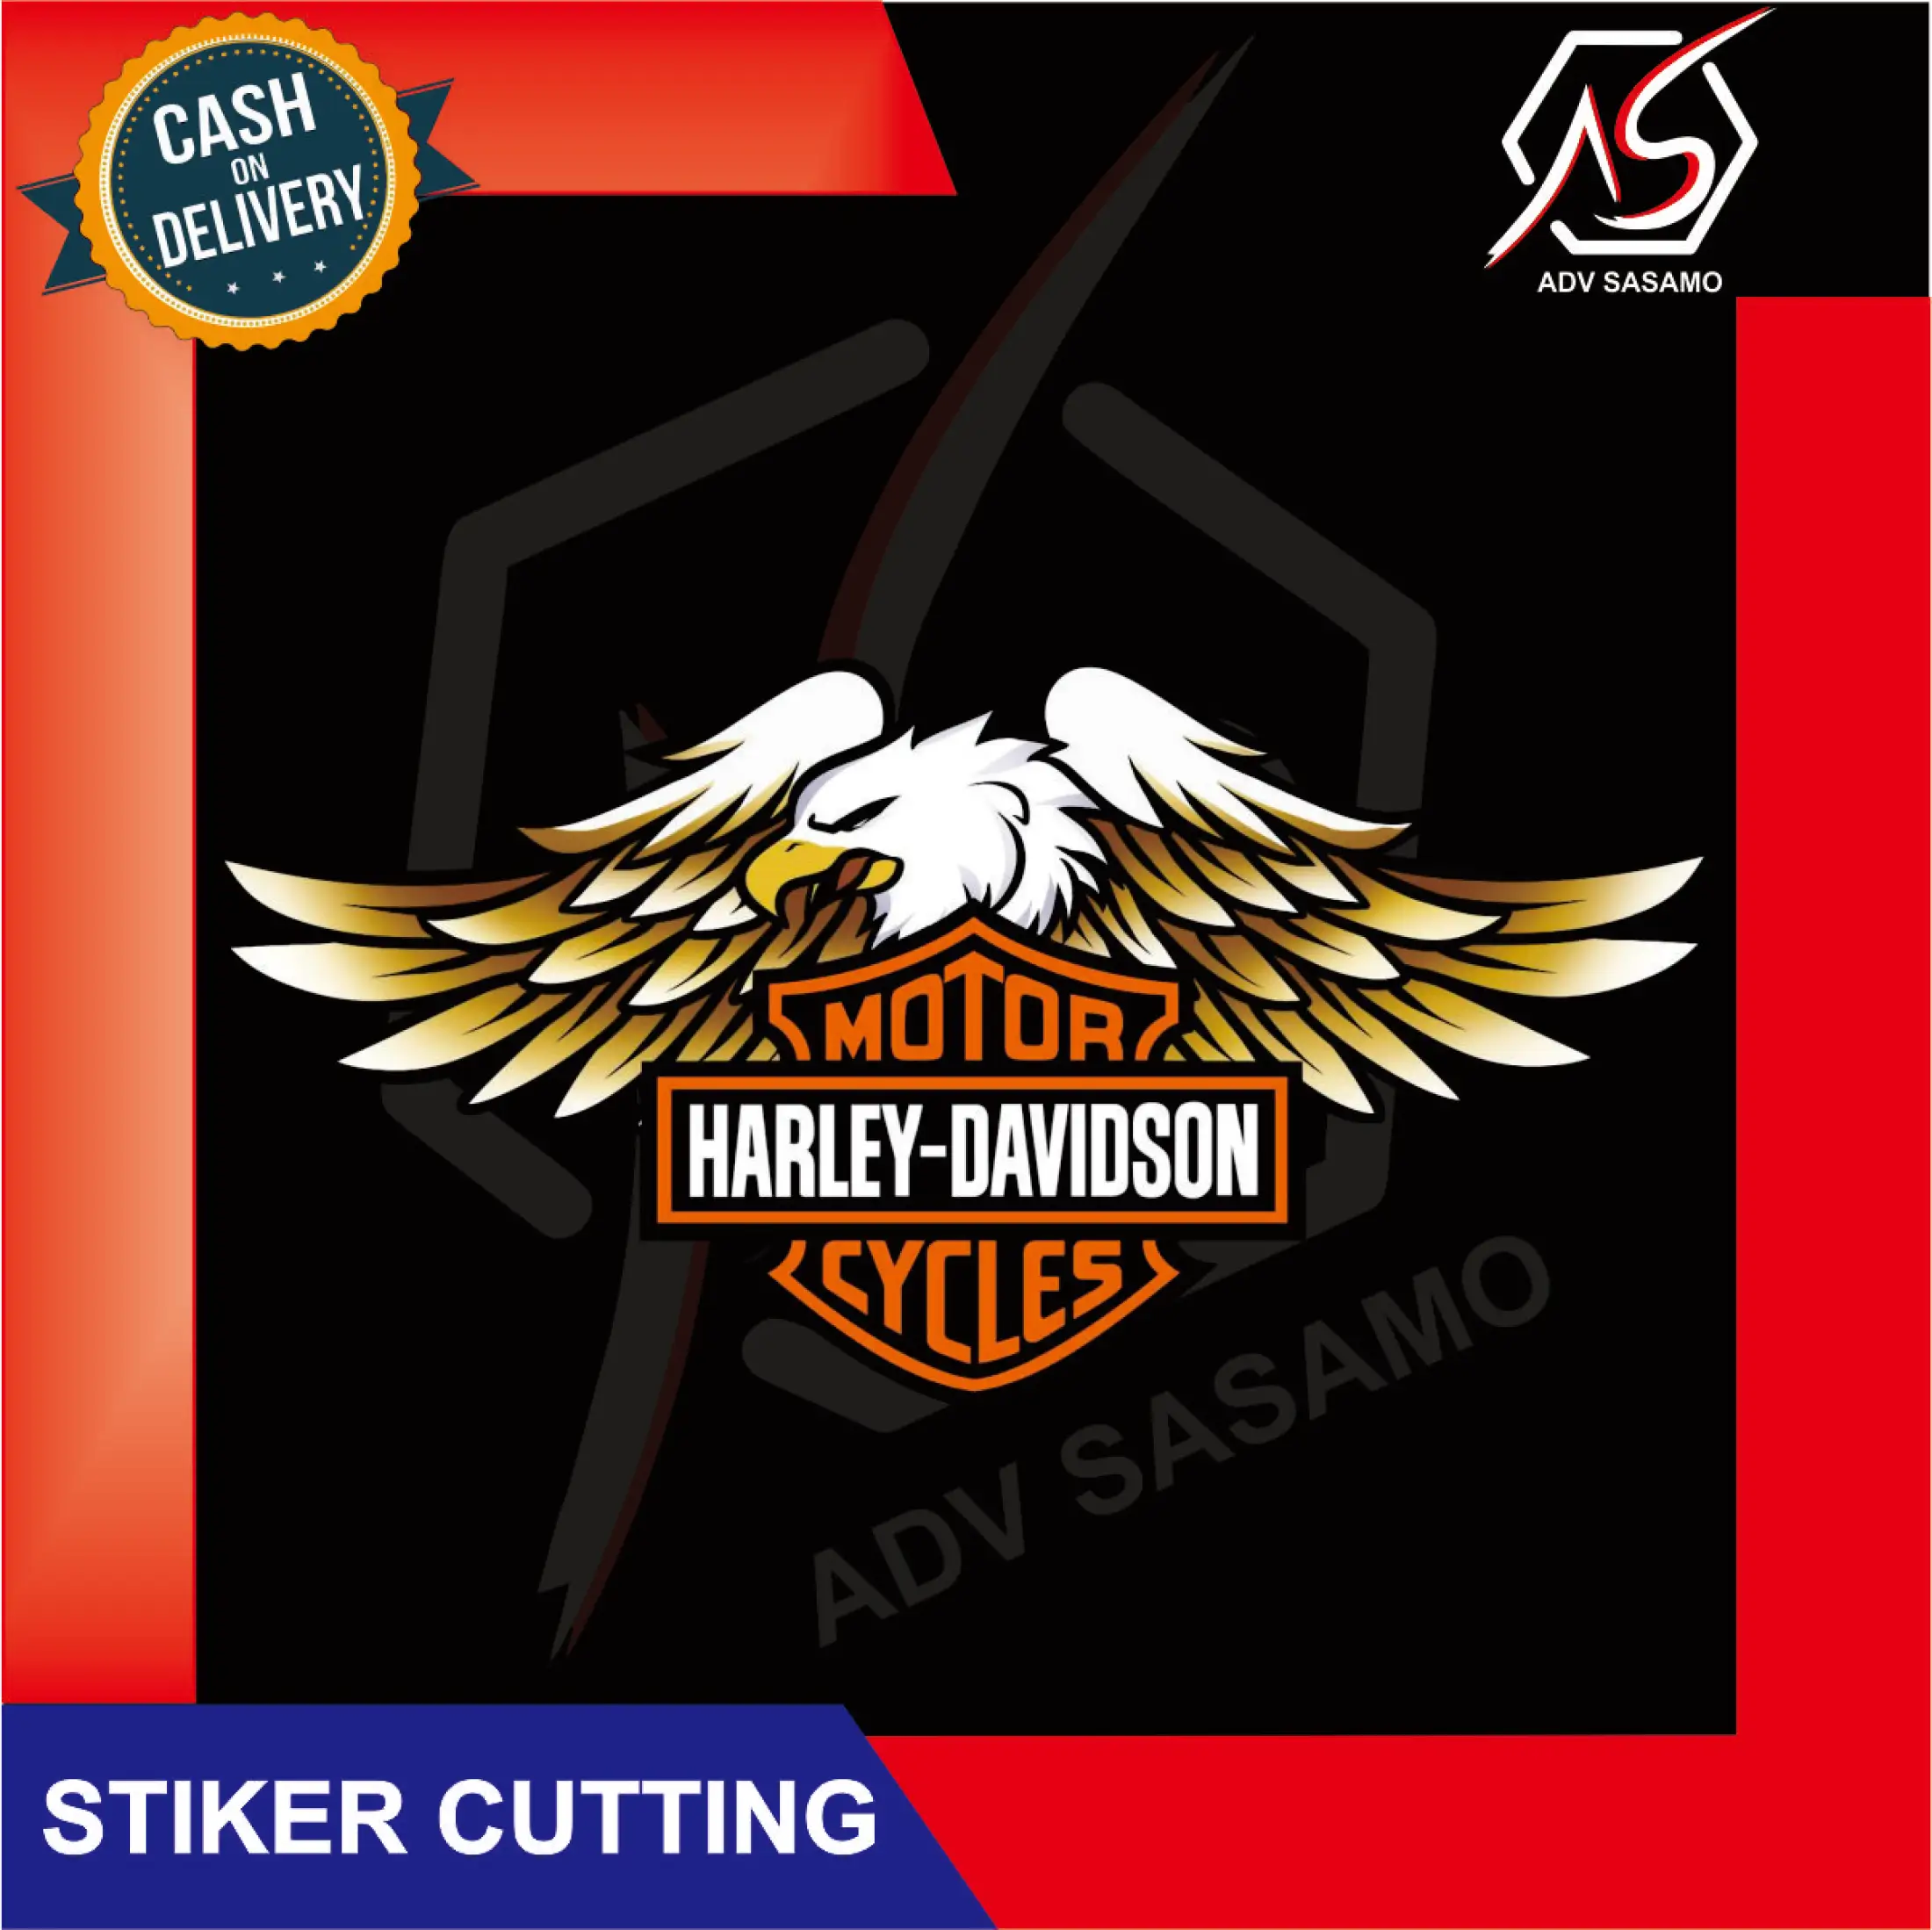 Termurah Cutting Sticker Mobil Sticker Harley Davidson Lazada Indonesia